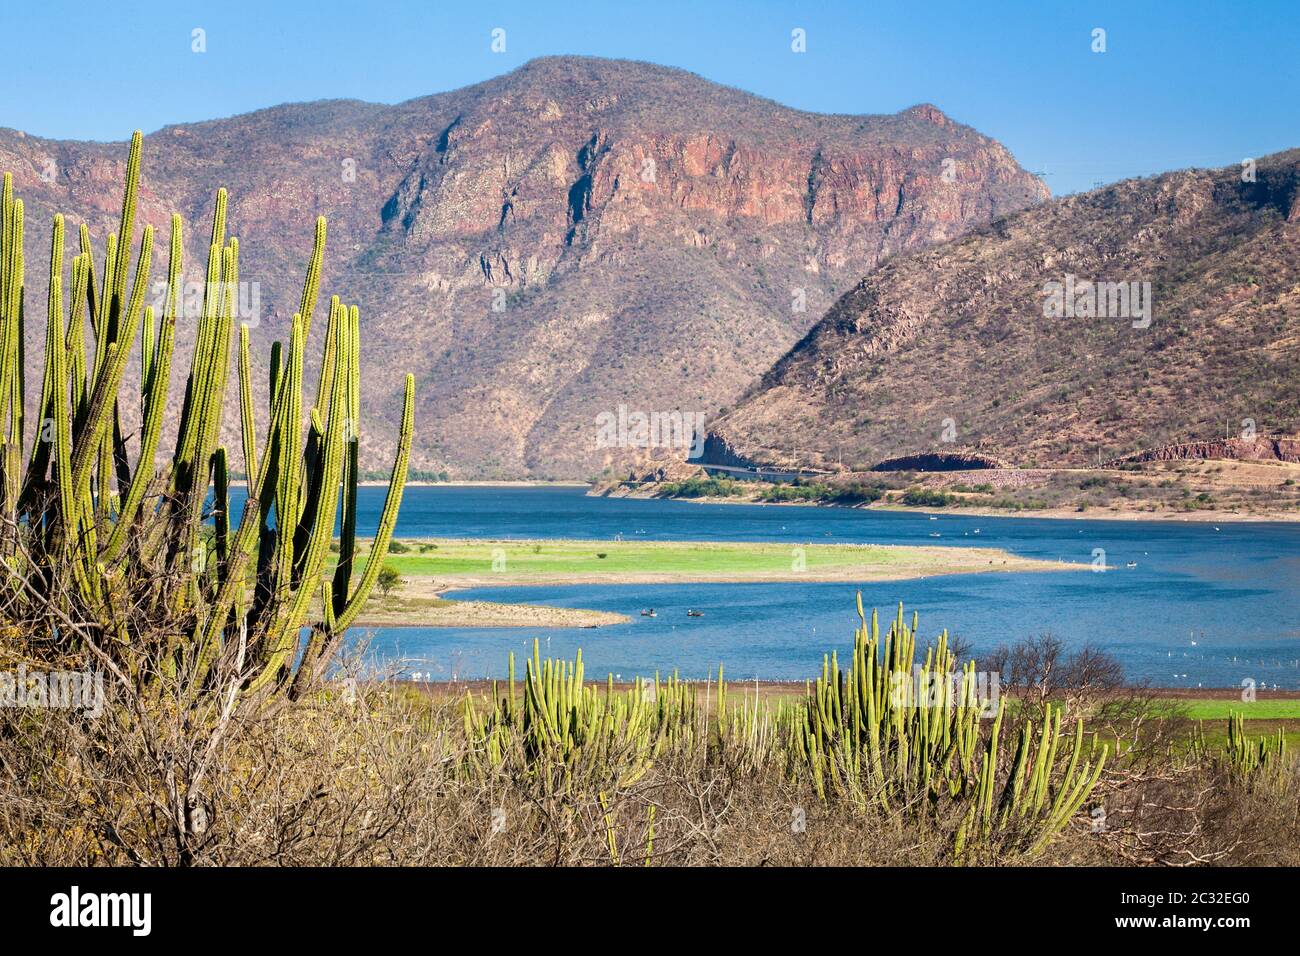 Cactus line the Infiernillo Dam in rural Michoacan, Mexico. Stock Photo